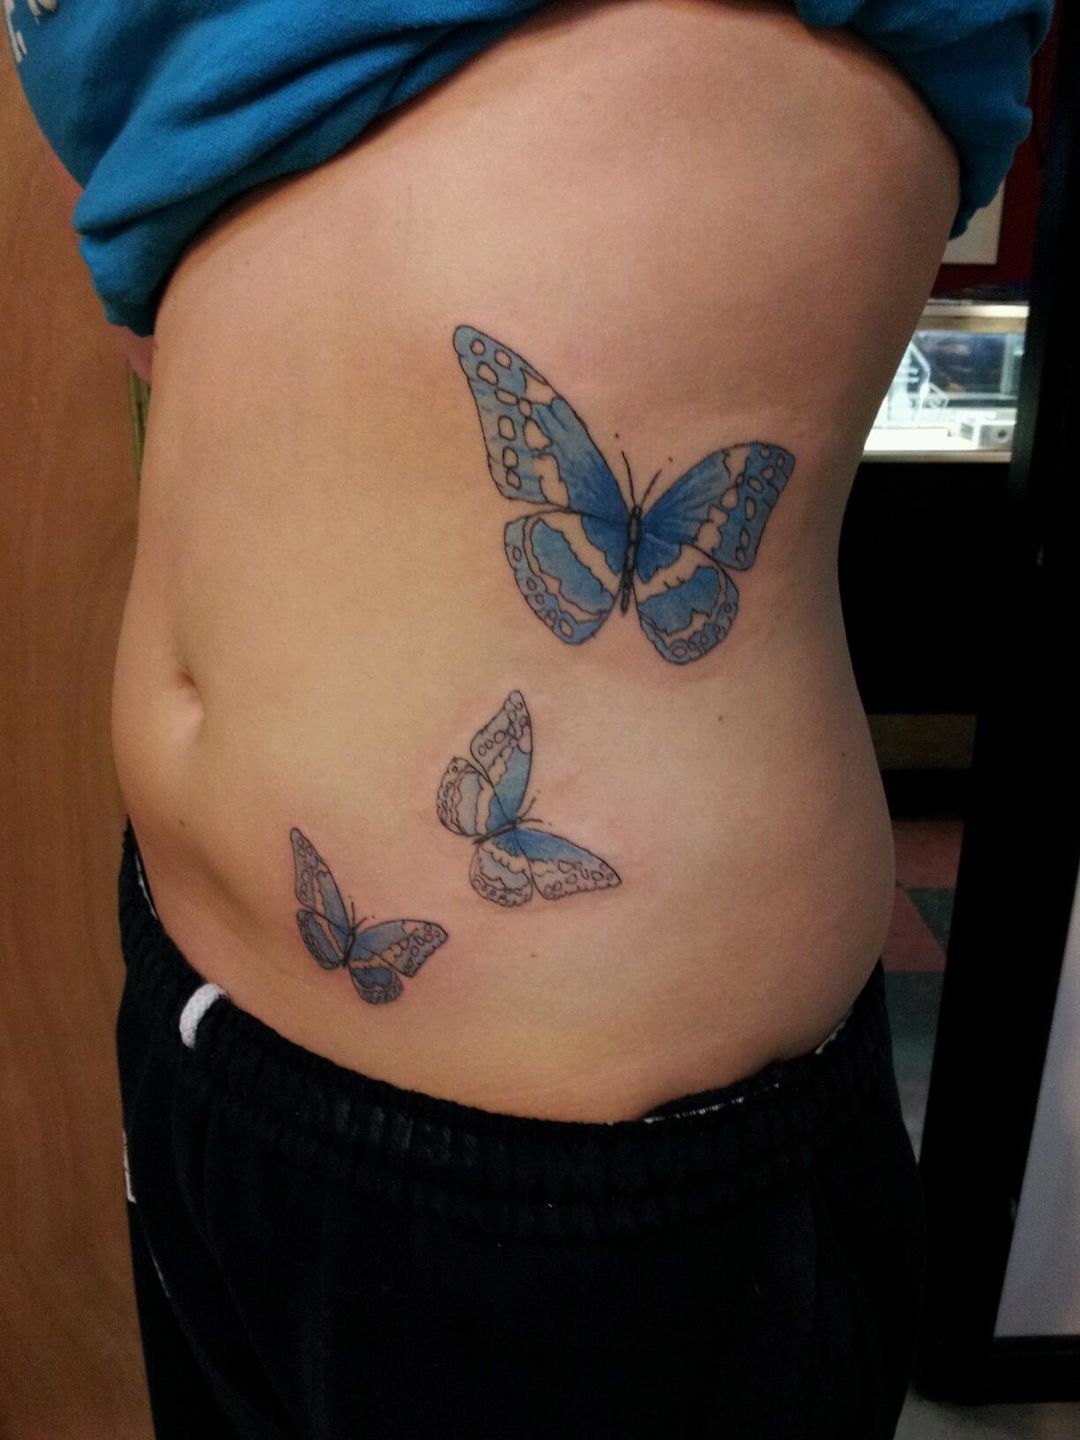 Ekta vaishnav on Instagram ektatattooart butterfly butterflytattoo  tattoo tattooartist tattoodesign tattoo tatt tattooideas